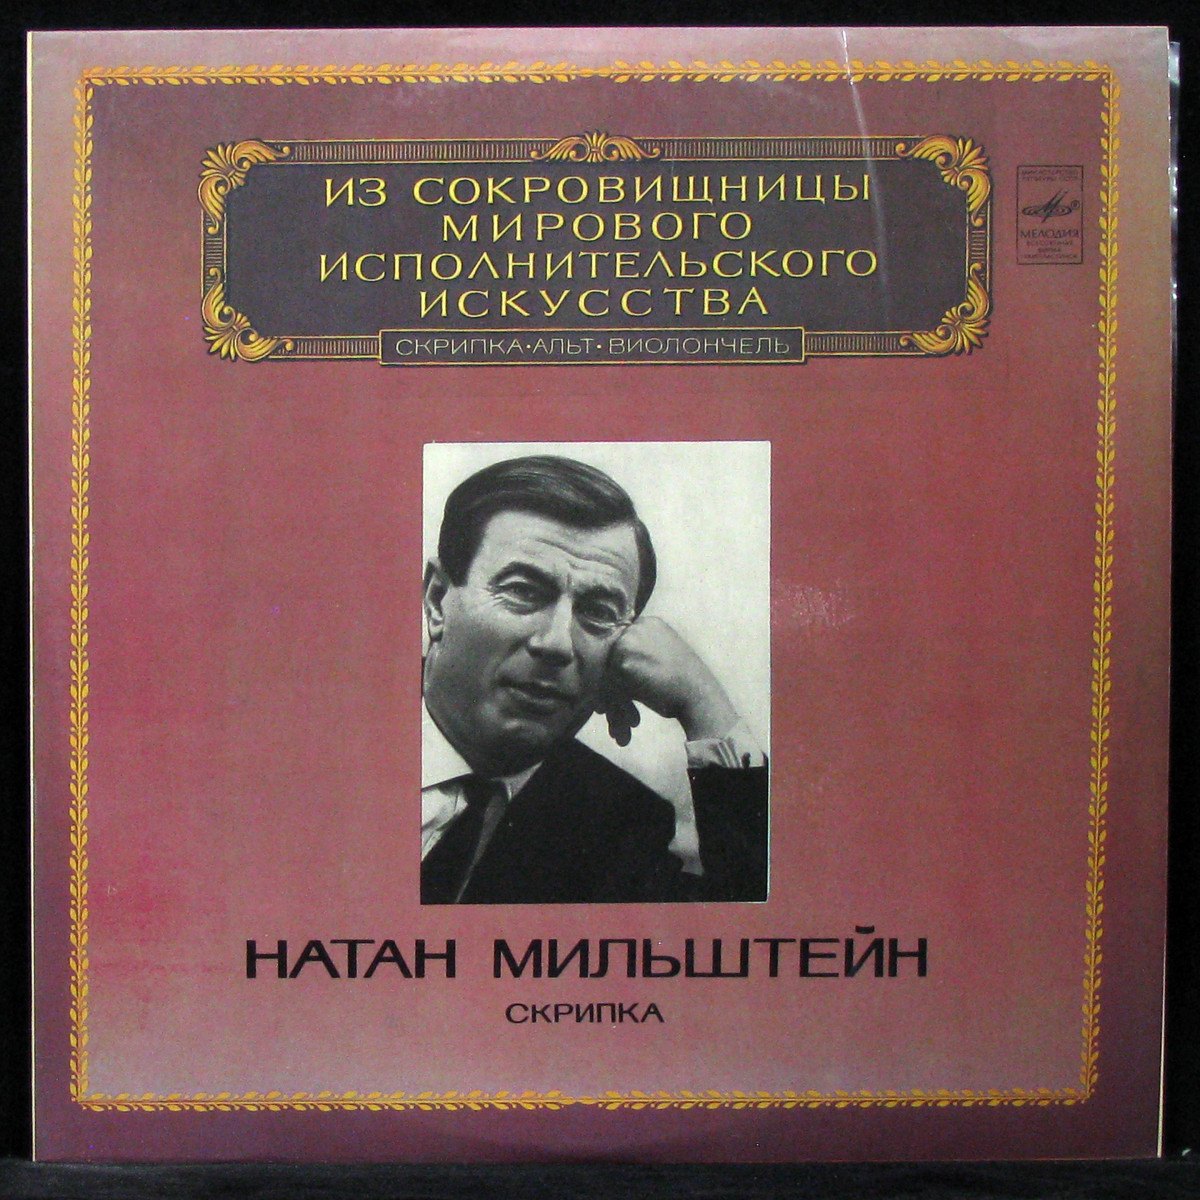 LP Nathan Milstein — Голдмарк, Бах: скрипка (mono) фото